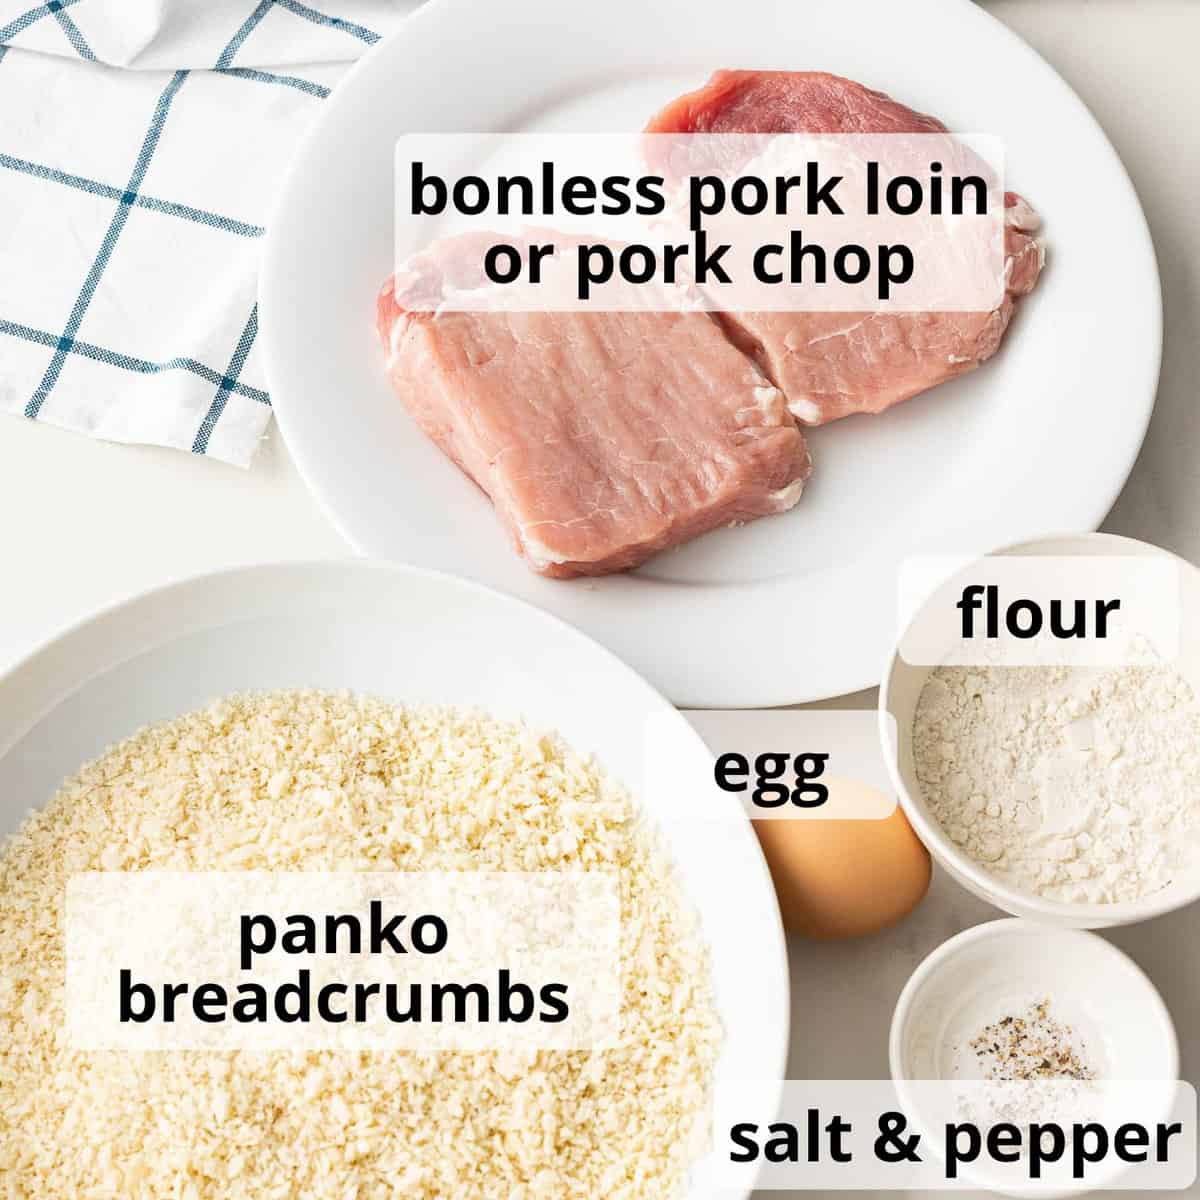 Ingredients for tonkatsu including boneless pork loin and panko breadcrumbs.